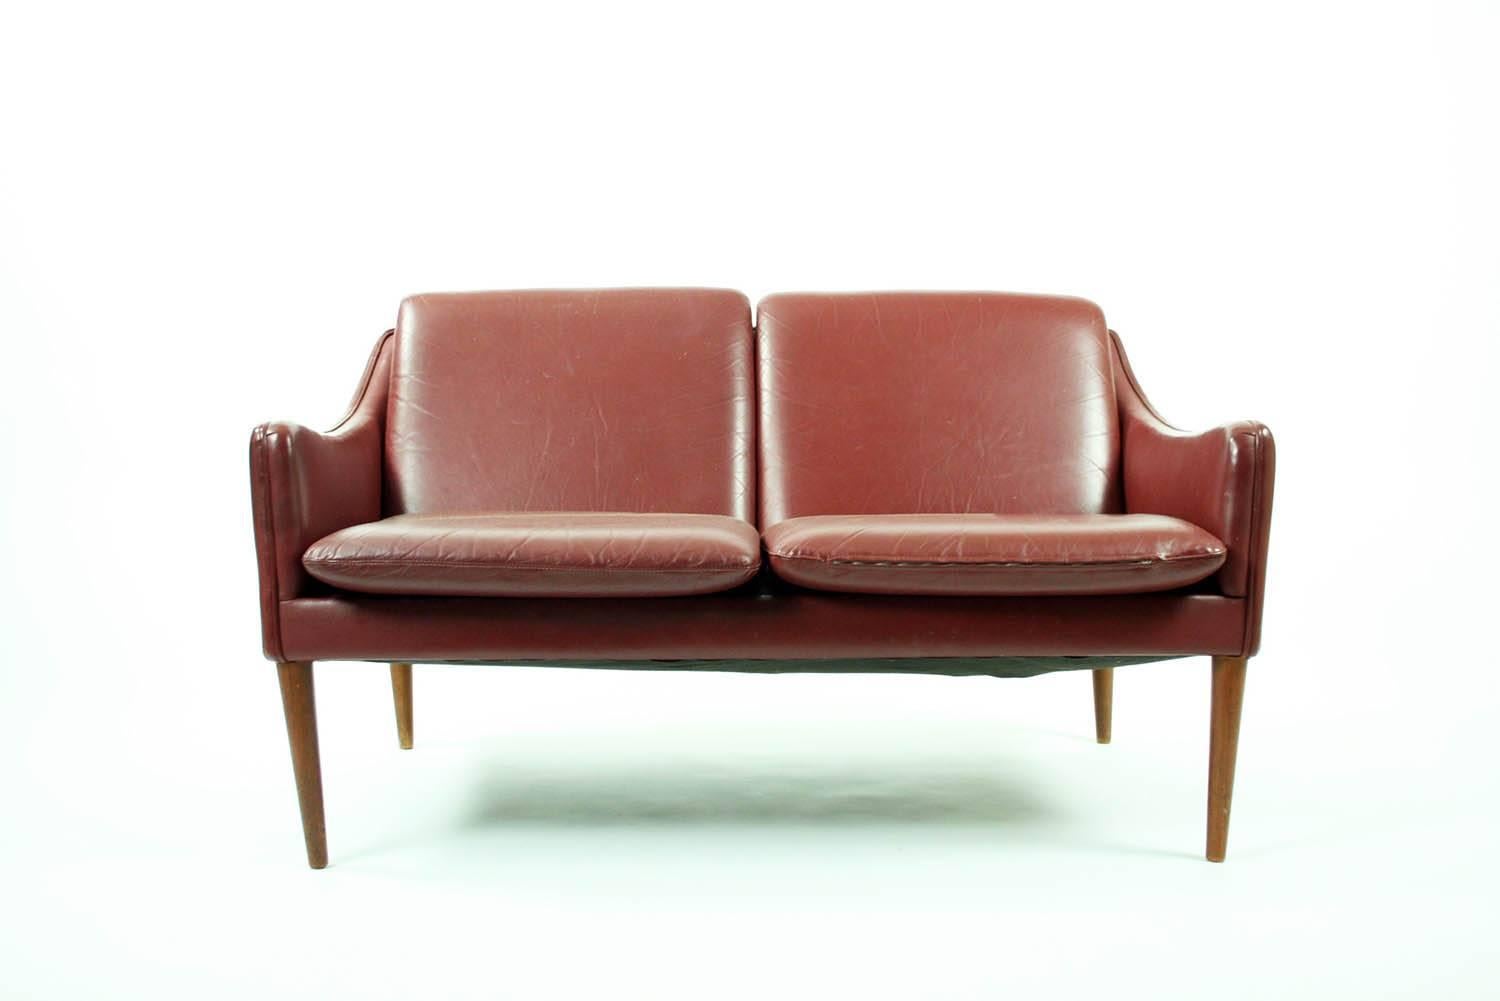 Hans Olsen leather settee model 800 for C/S Møbler Denmark, 1958 in excellent condition.